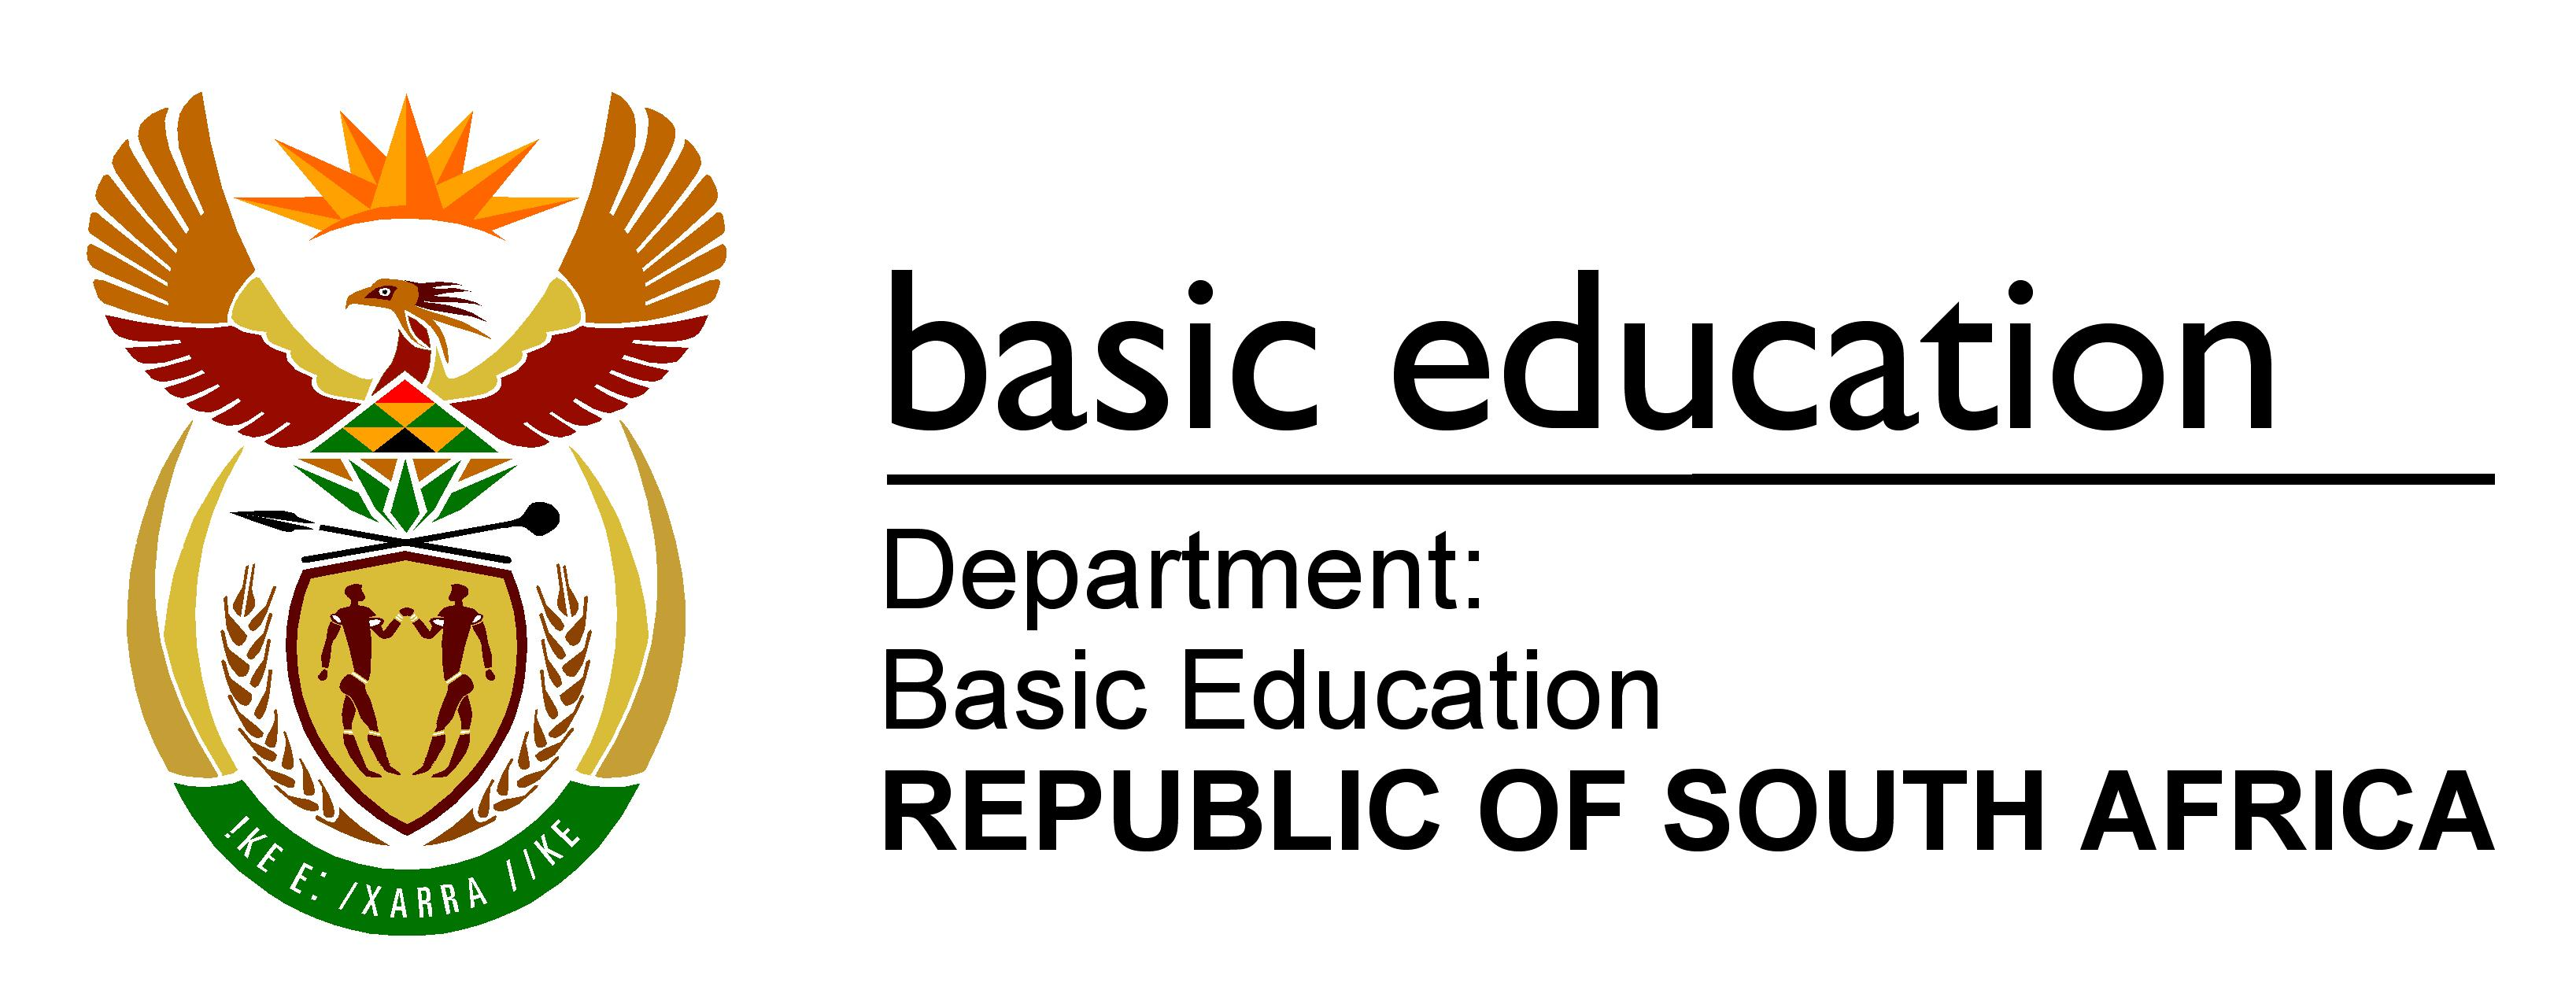 Pezulu Outdoor Advertising - Basic Education Client Logo